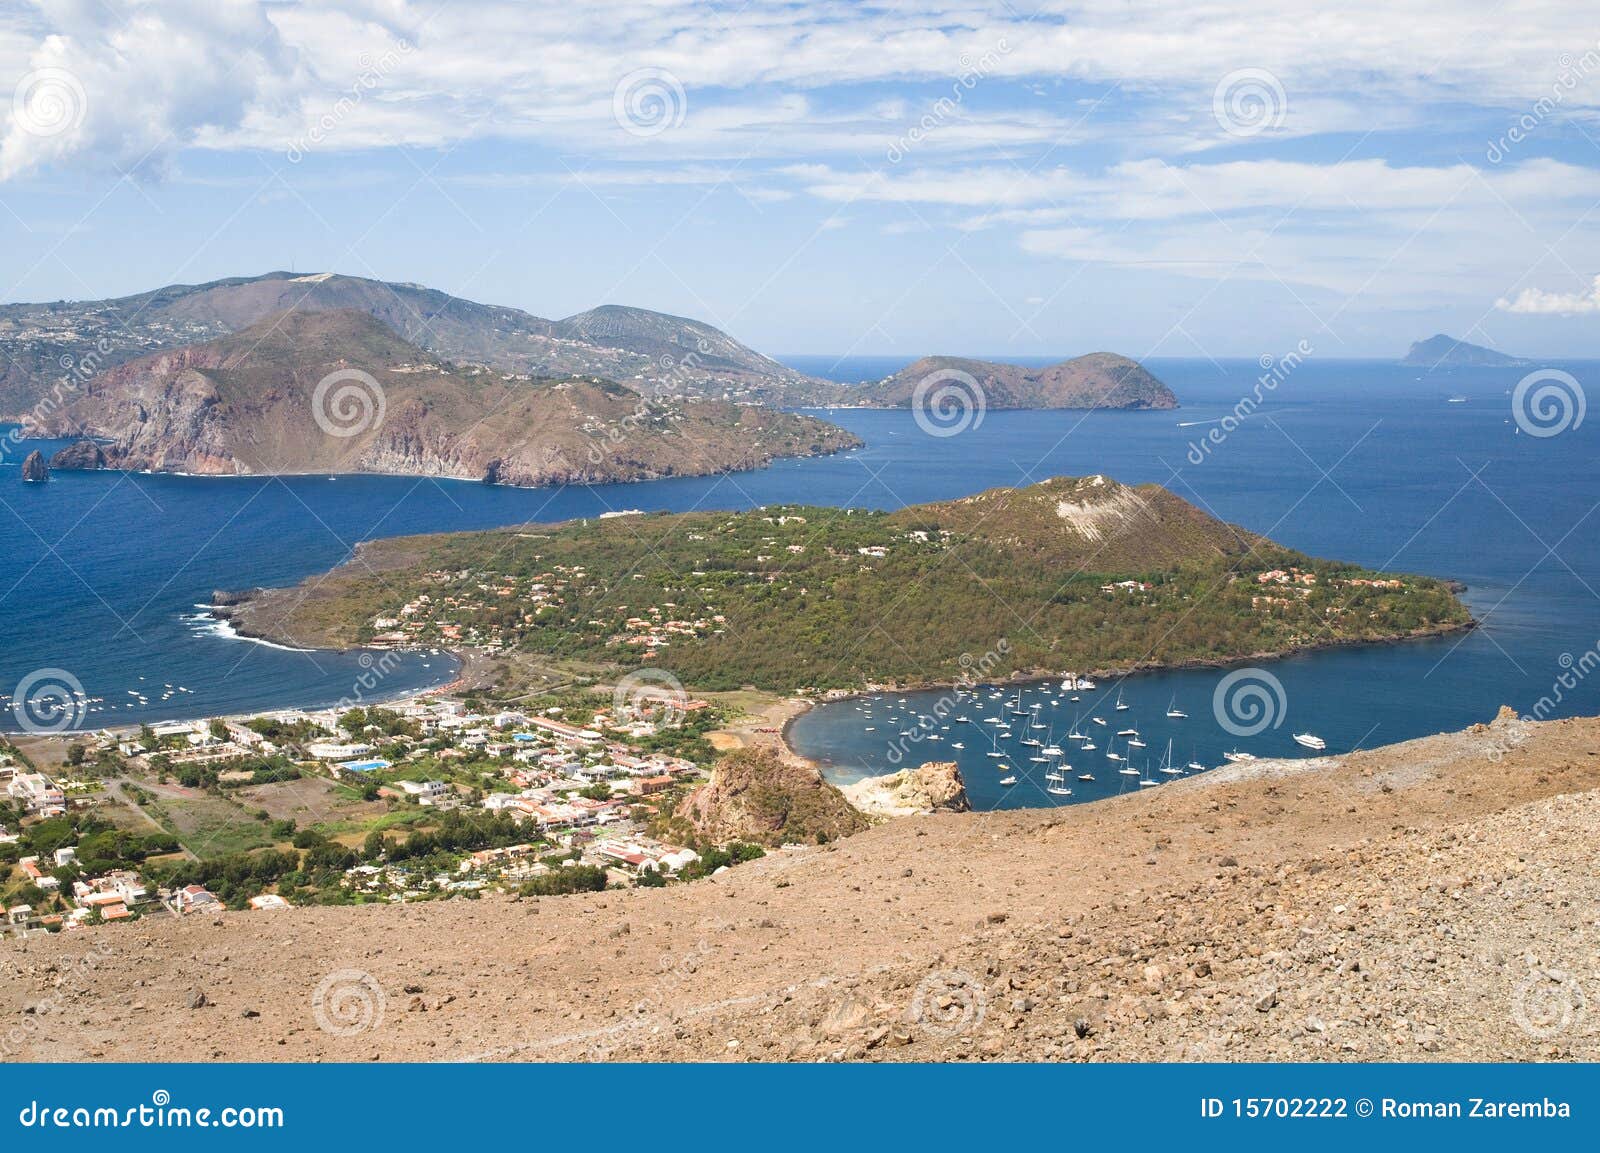 view of aeolian islands